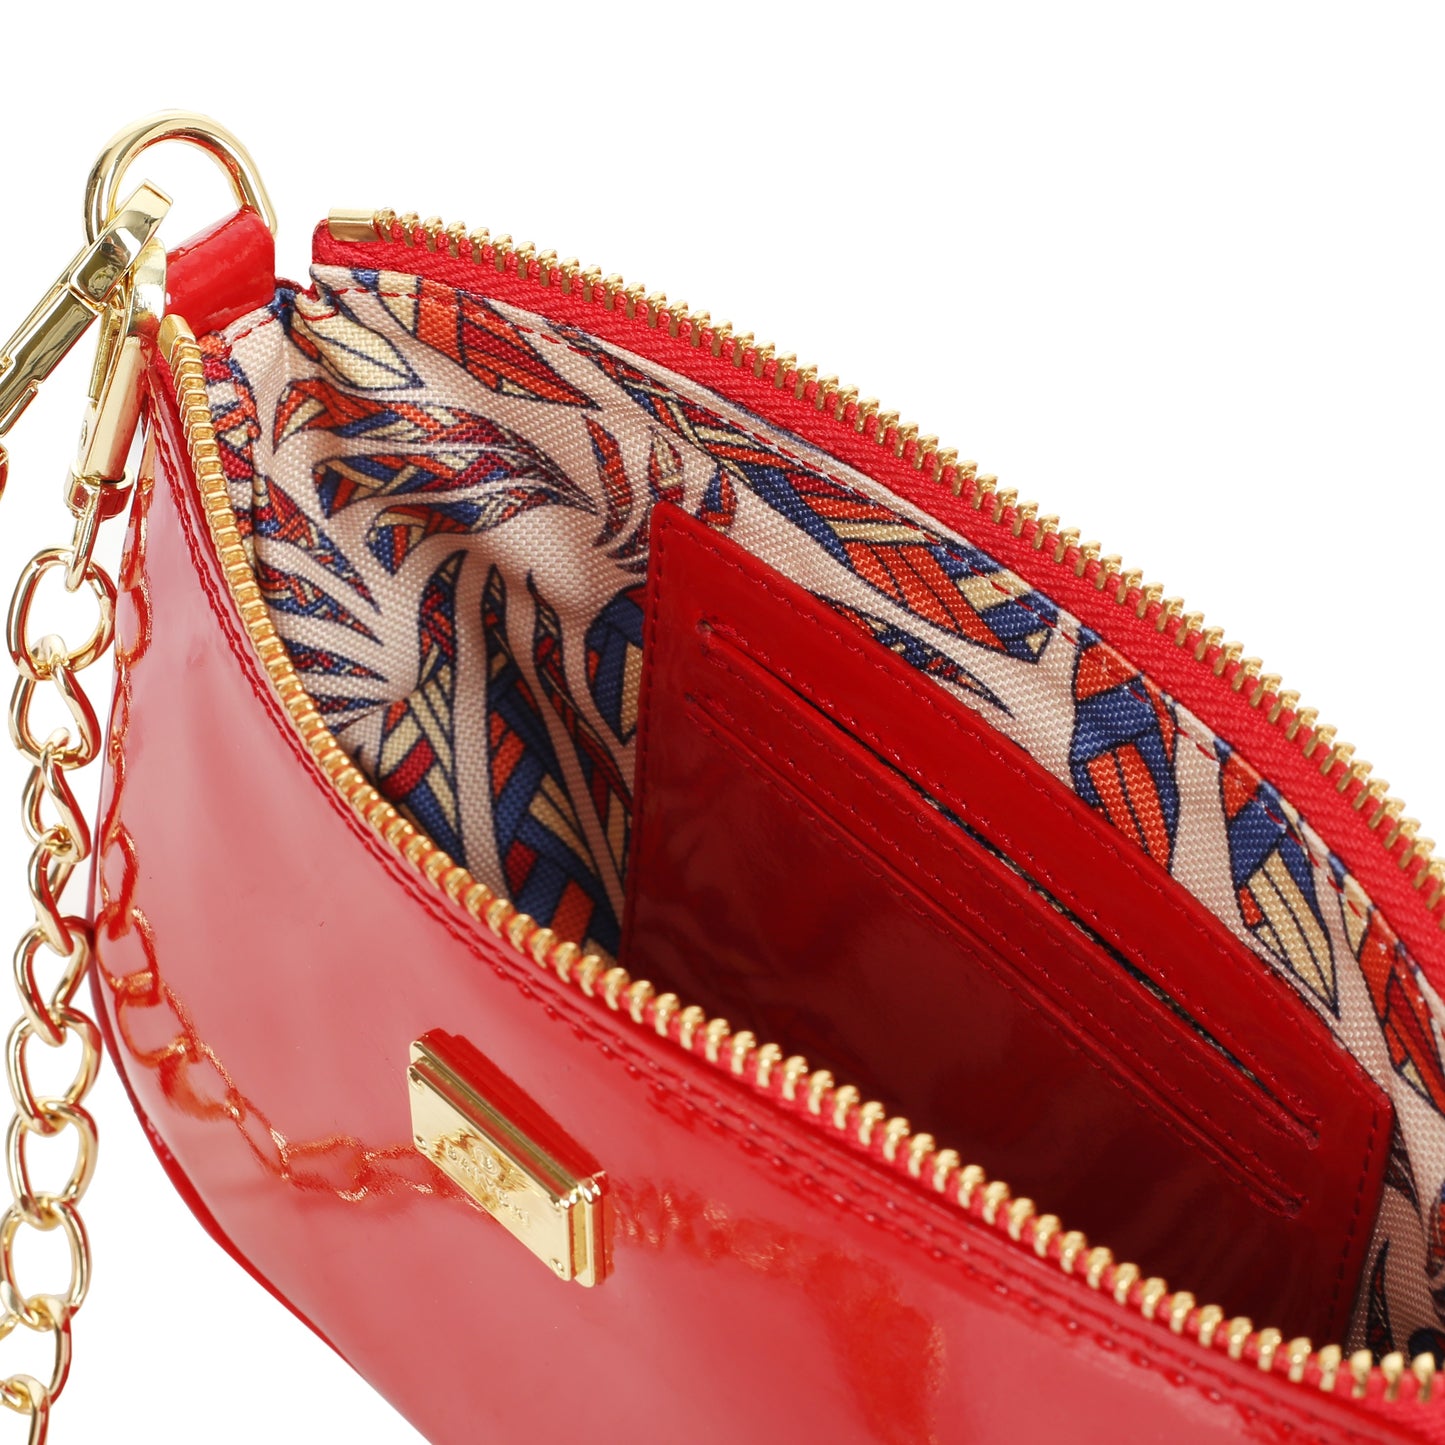 HARLEY MINI VERNICE RED women's leather handbag